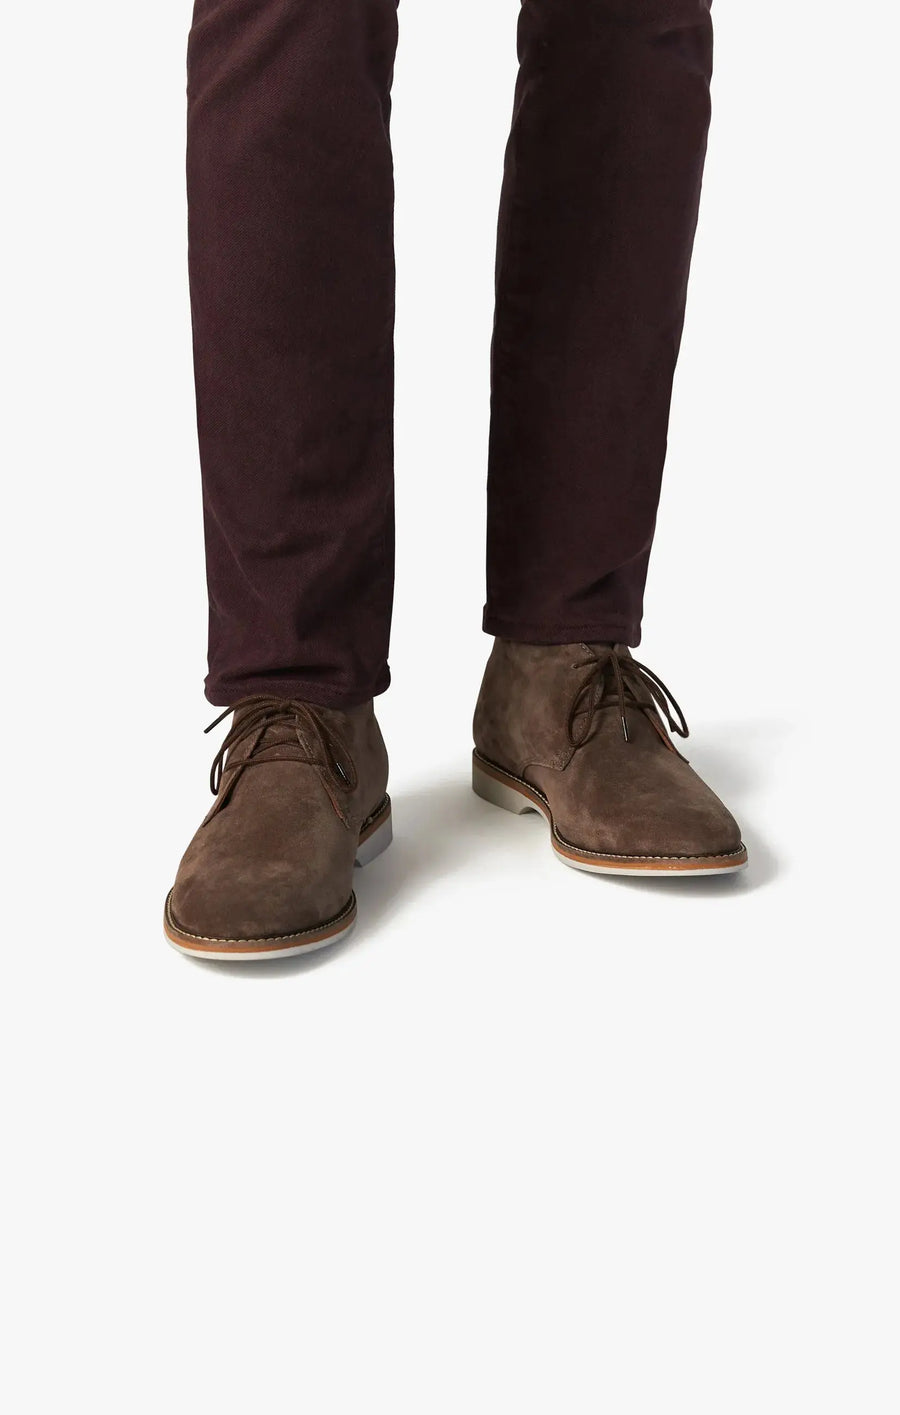 34 HERITAGE | Cool Slim Leg Pants | Merlot Diagonal Brothers Clothing Co.